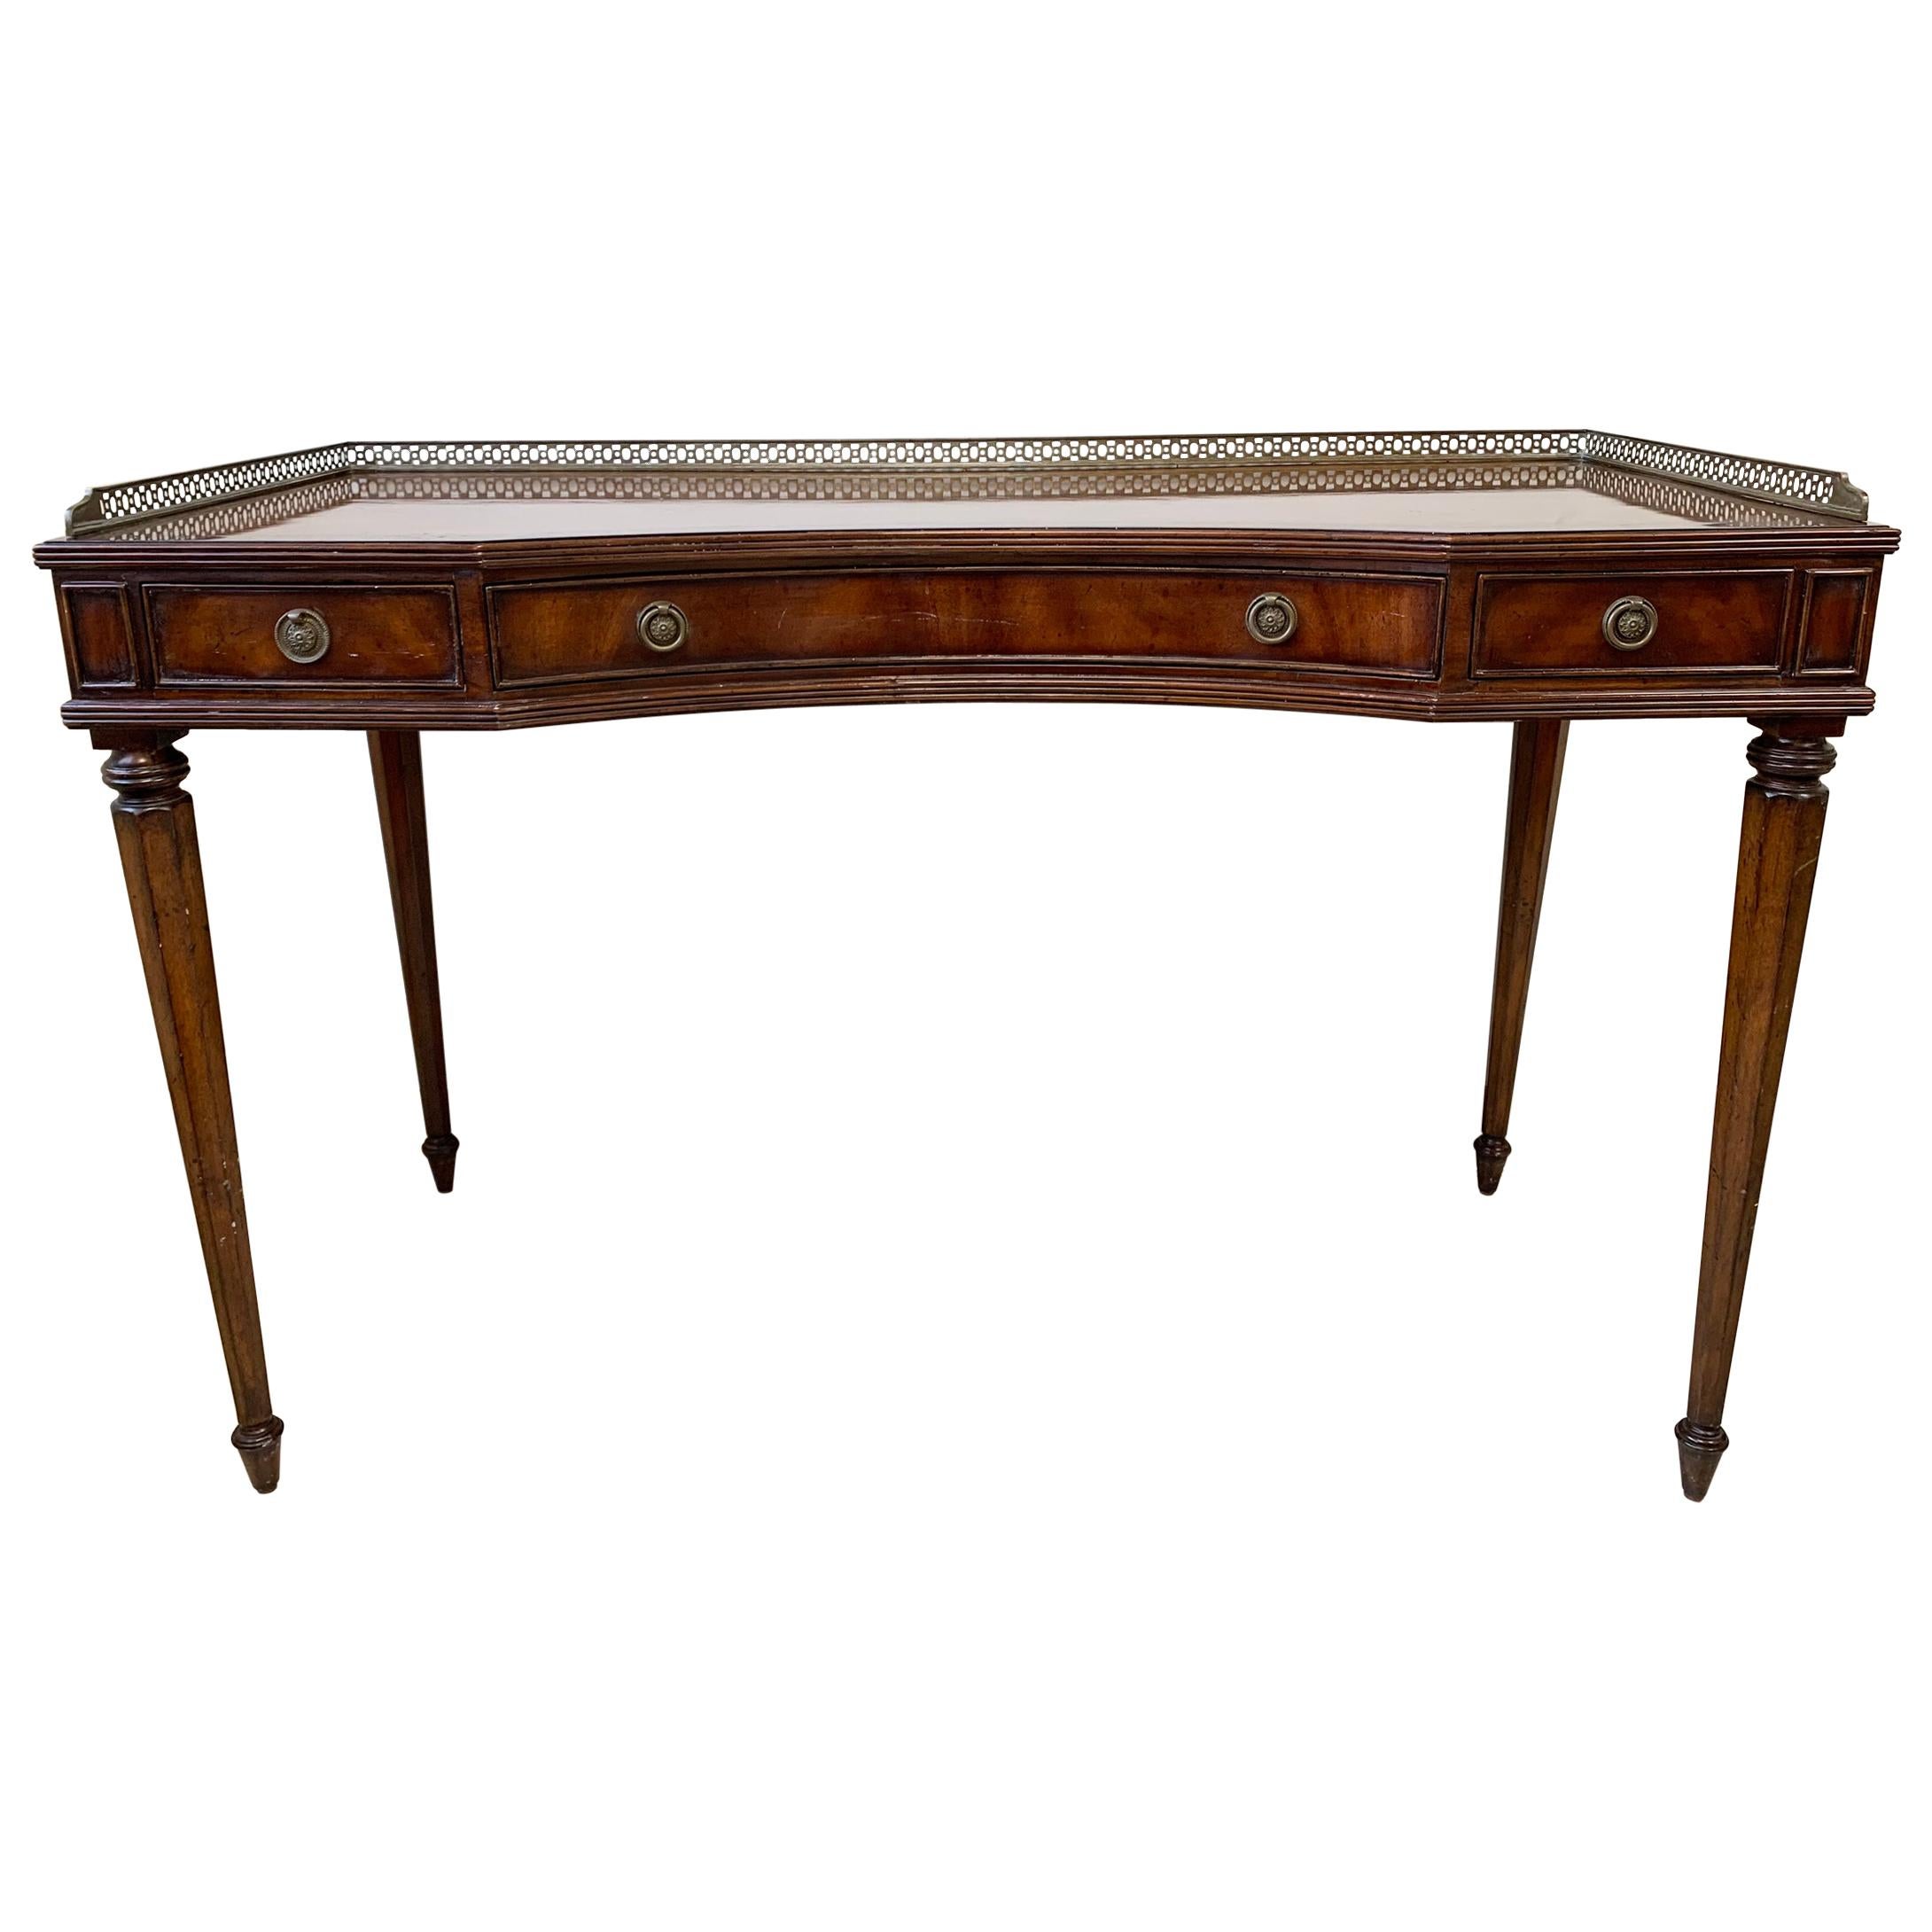 French Louis XVI Style Maitland-Smith Mahogany Desk or Writing Table